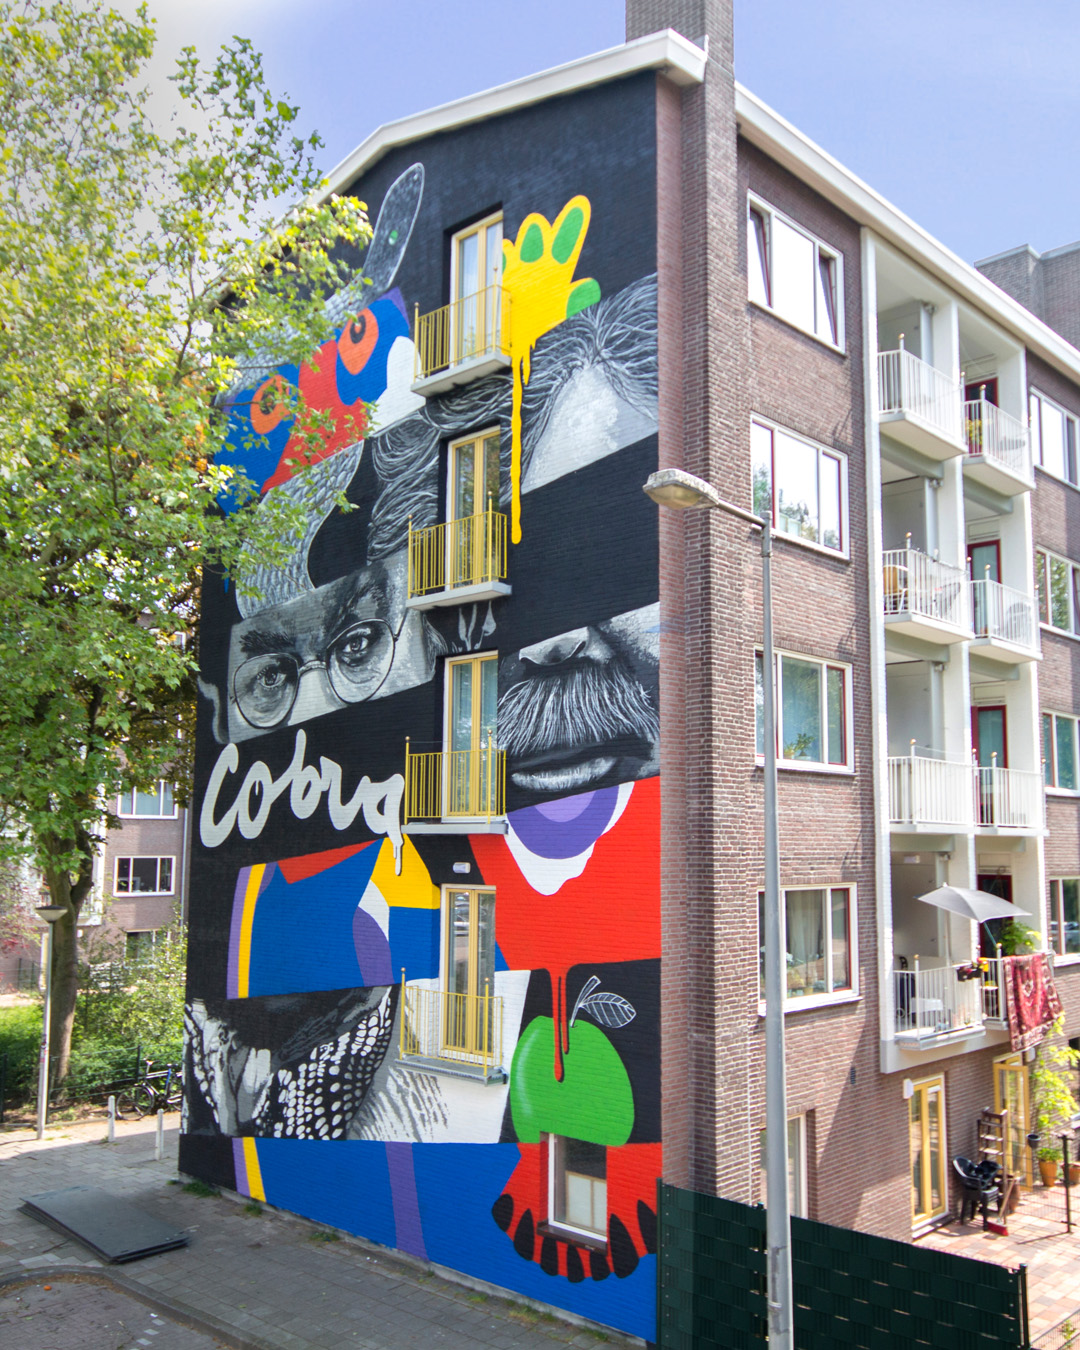 Sjem Bakkus, IVES.one & Beazarility for "If Walls Could Speak" festival by Amsterdam Street Art